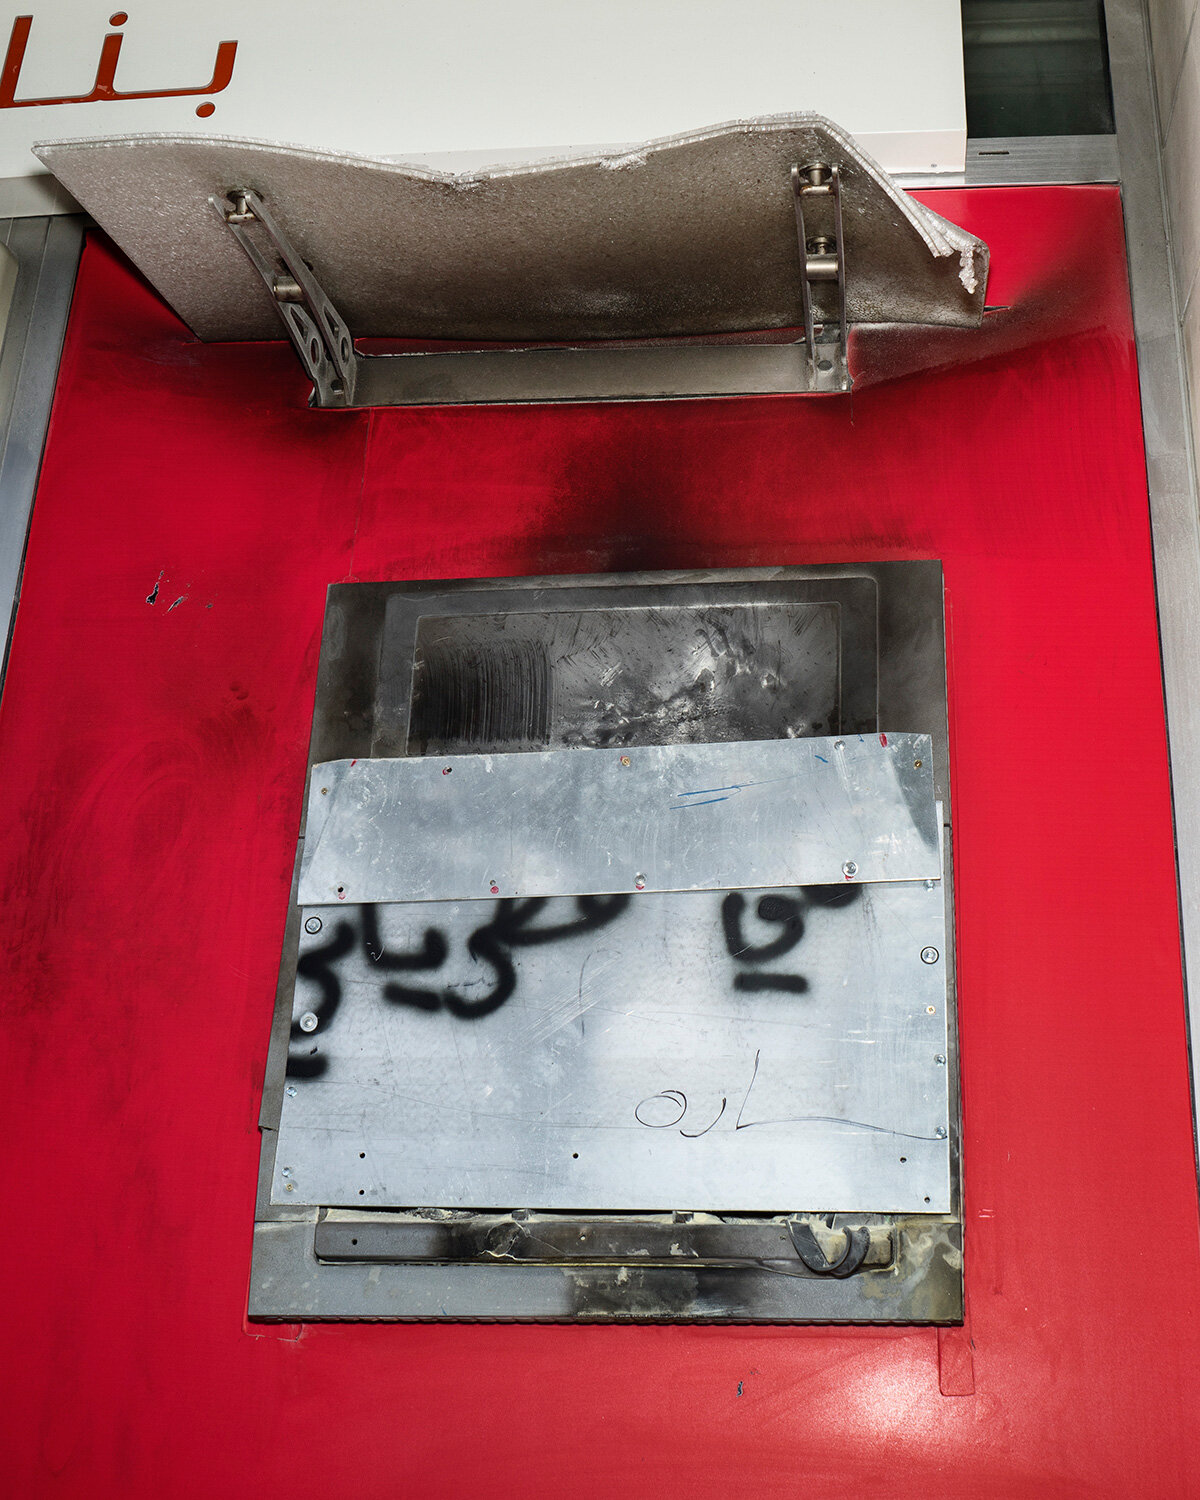   ATM 5 (red wall).  Beirut, Lebanon, 2020   Archival fiber inkjet print   20 x 16 inches  